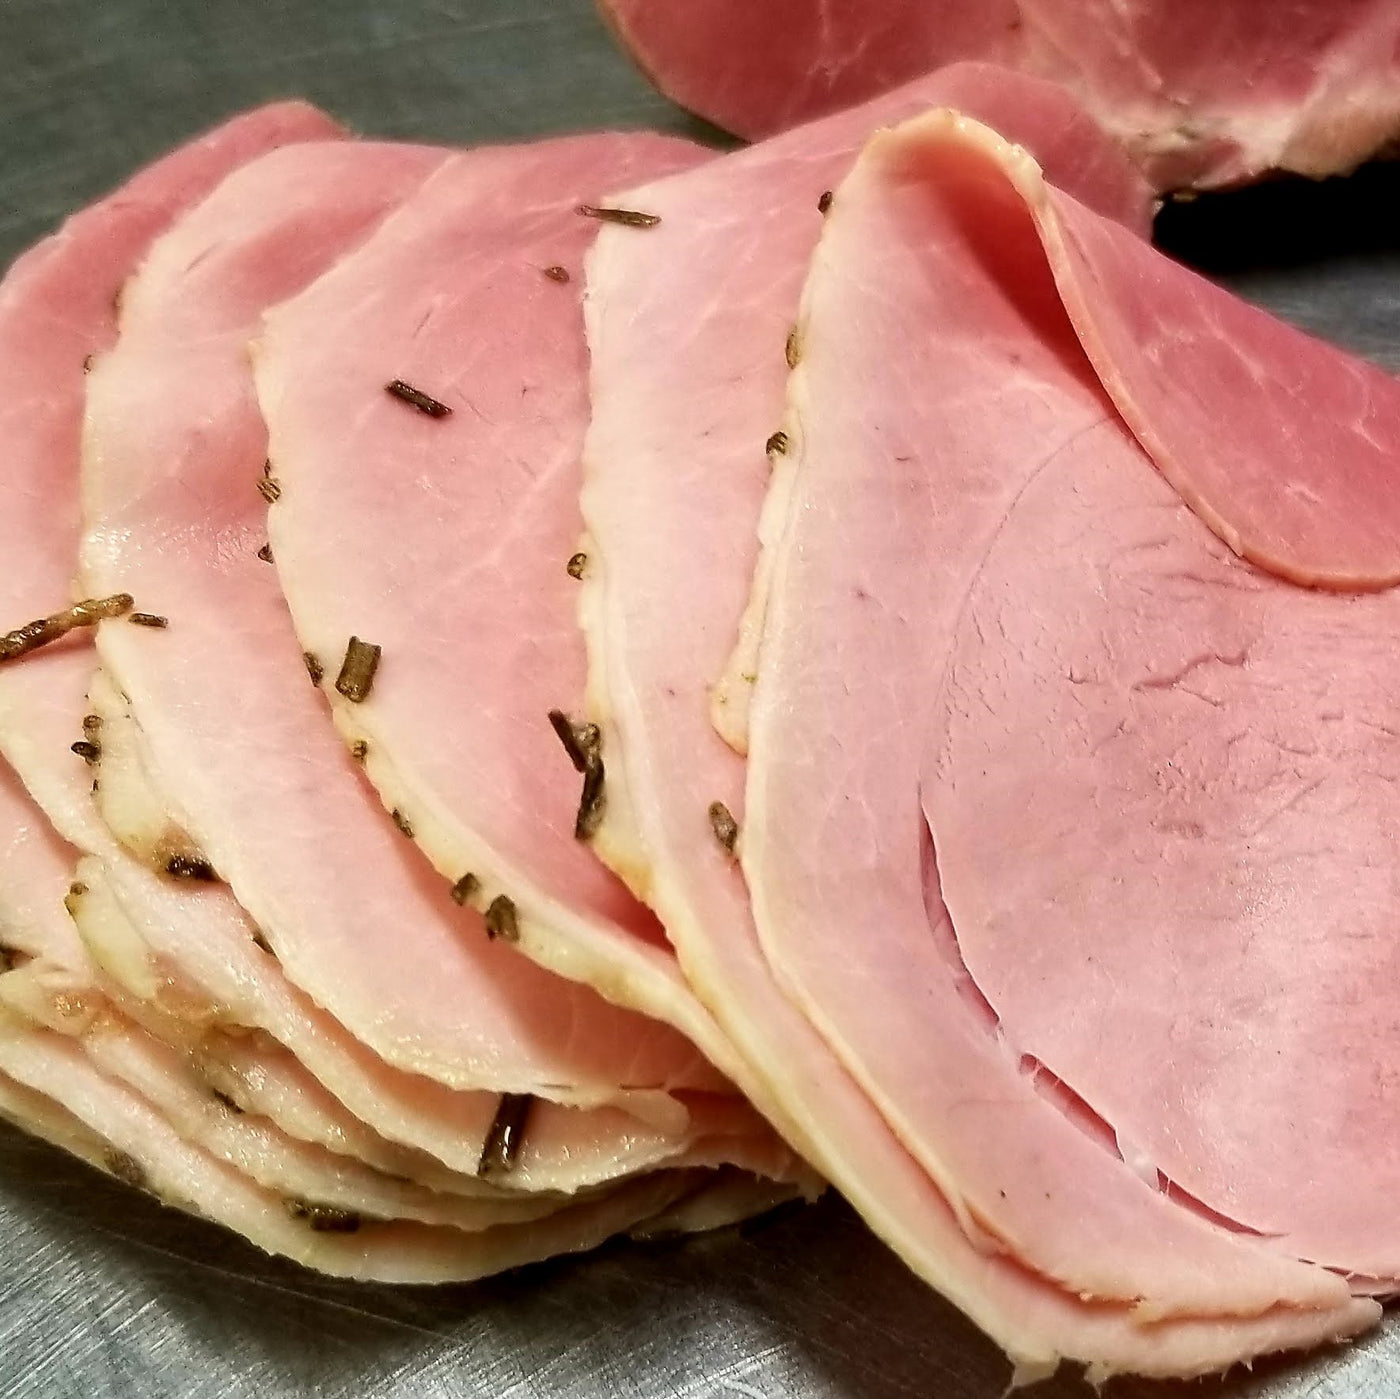 Rosemary-Herb Spiced Ham